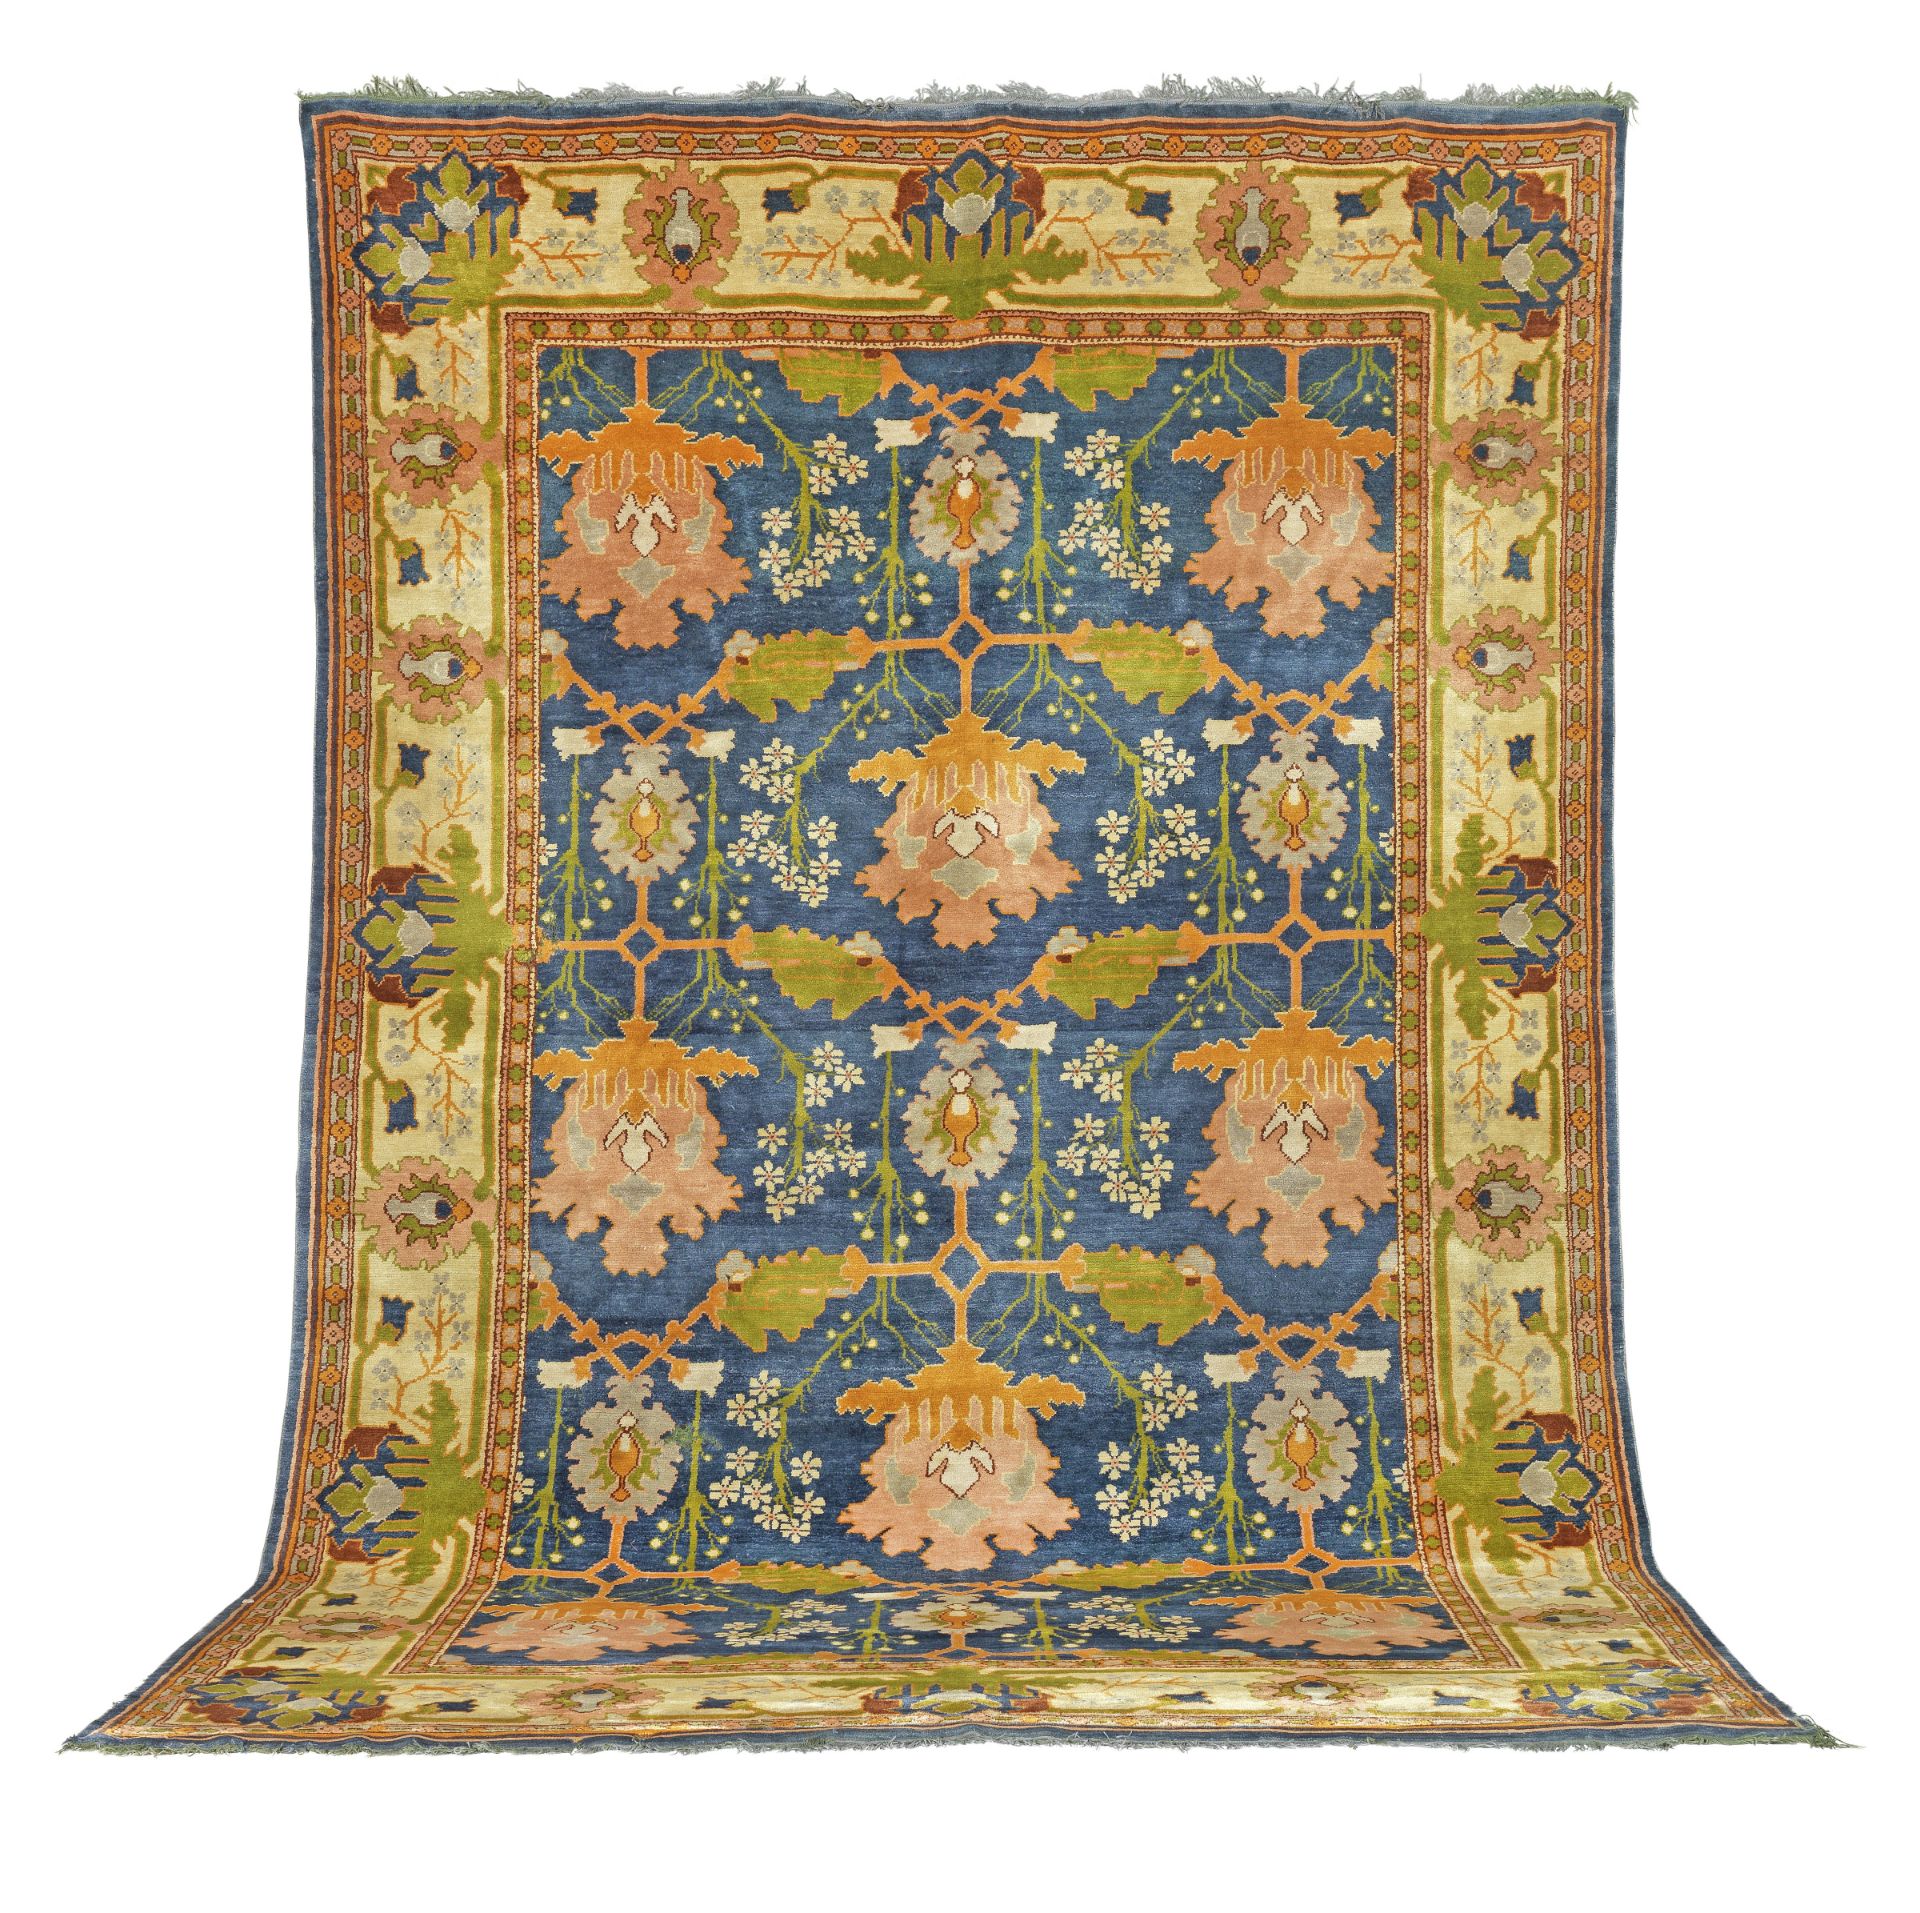 A vibrant Gavin Morton Donegal carpet early 20th century 560cm x 360cm approximately